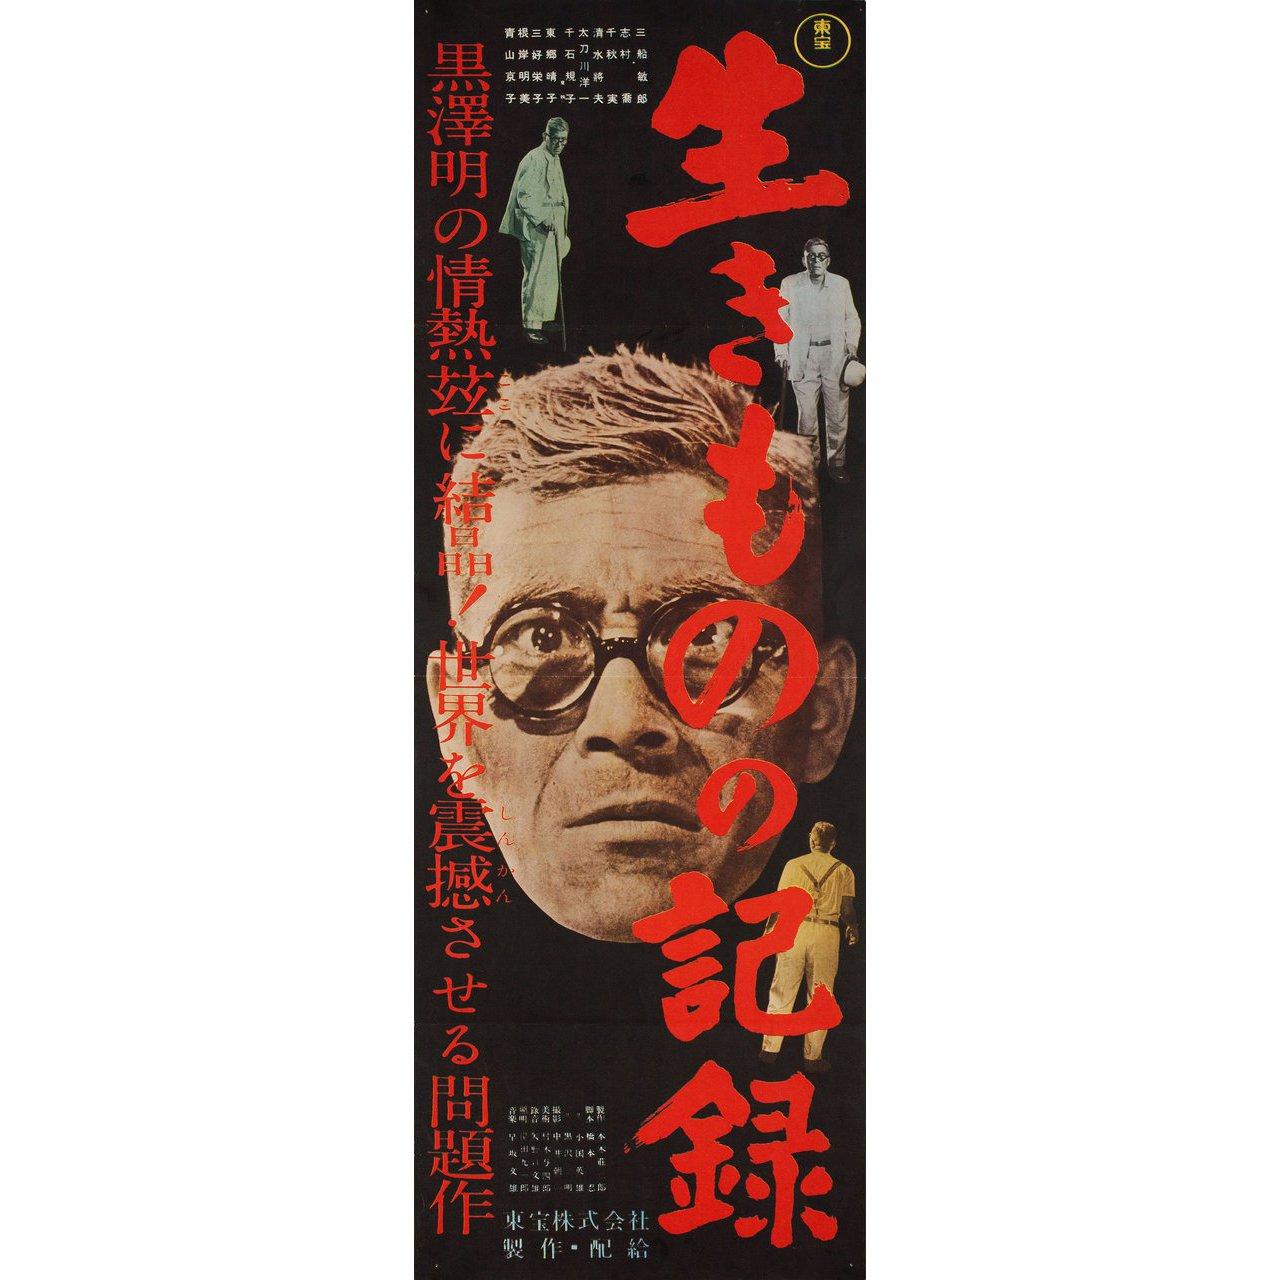 Original 1955 Japanese speed poster for the film I Live in Fear (Ikimono no kiroku) directed by Akira Kurosawa with Toshiro Mifune / Takashi Shimura / Minoru Chiaki / Eiko Miyoshi. Very good-fine condition, folded. Many original posters were issued